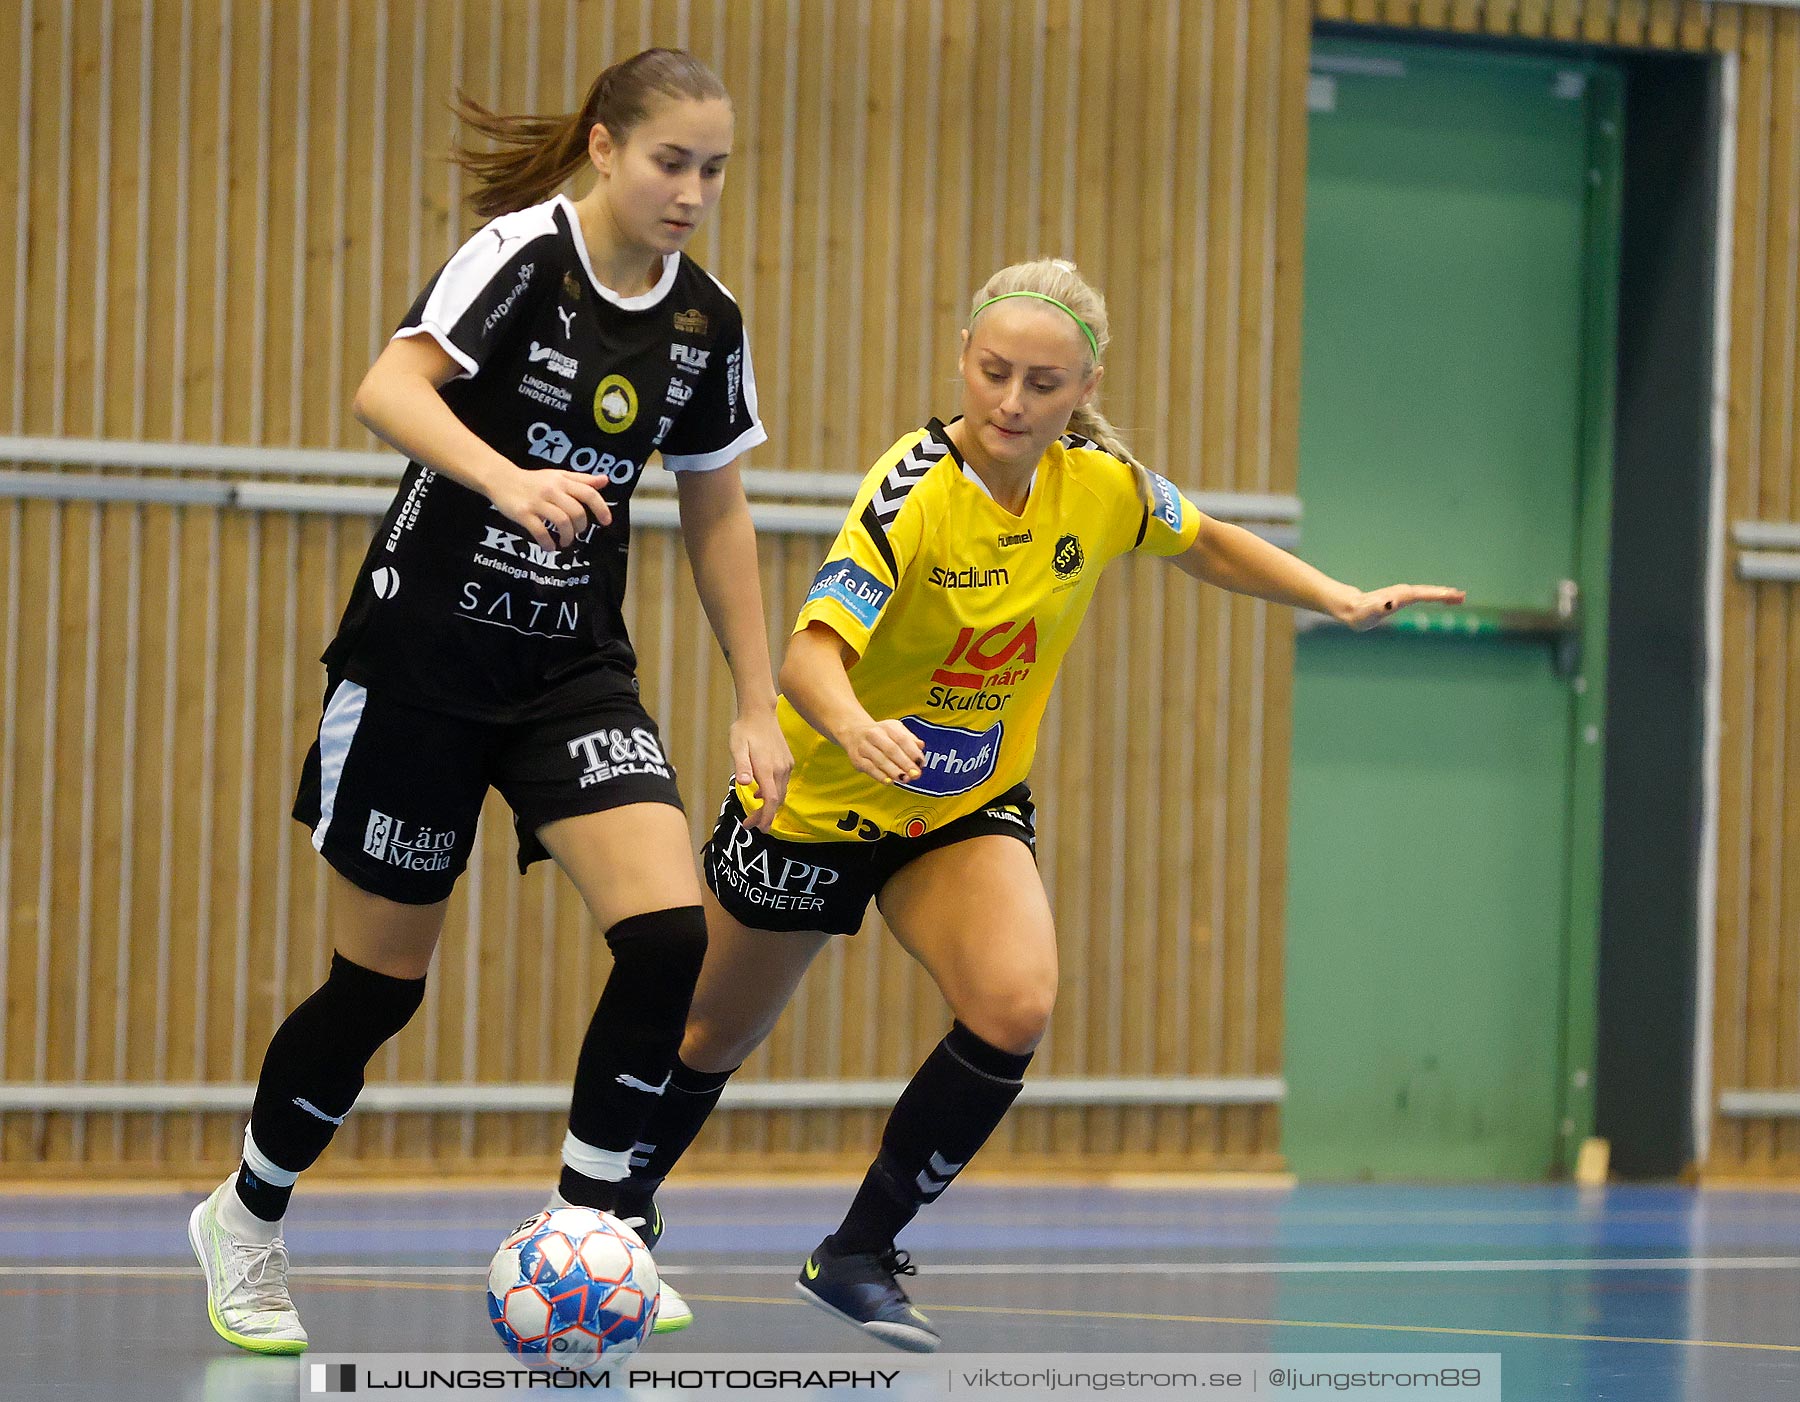 Skövde Futsalcup 2021 Damer Örebro Futsal Club-Skultorps IF 2,dam,Arena Skövde,Skövde,Sverige,Futsal,,2021,270462